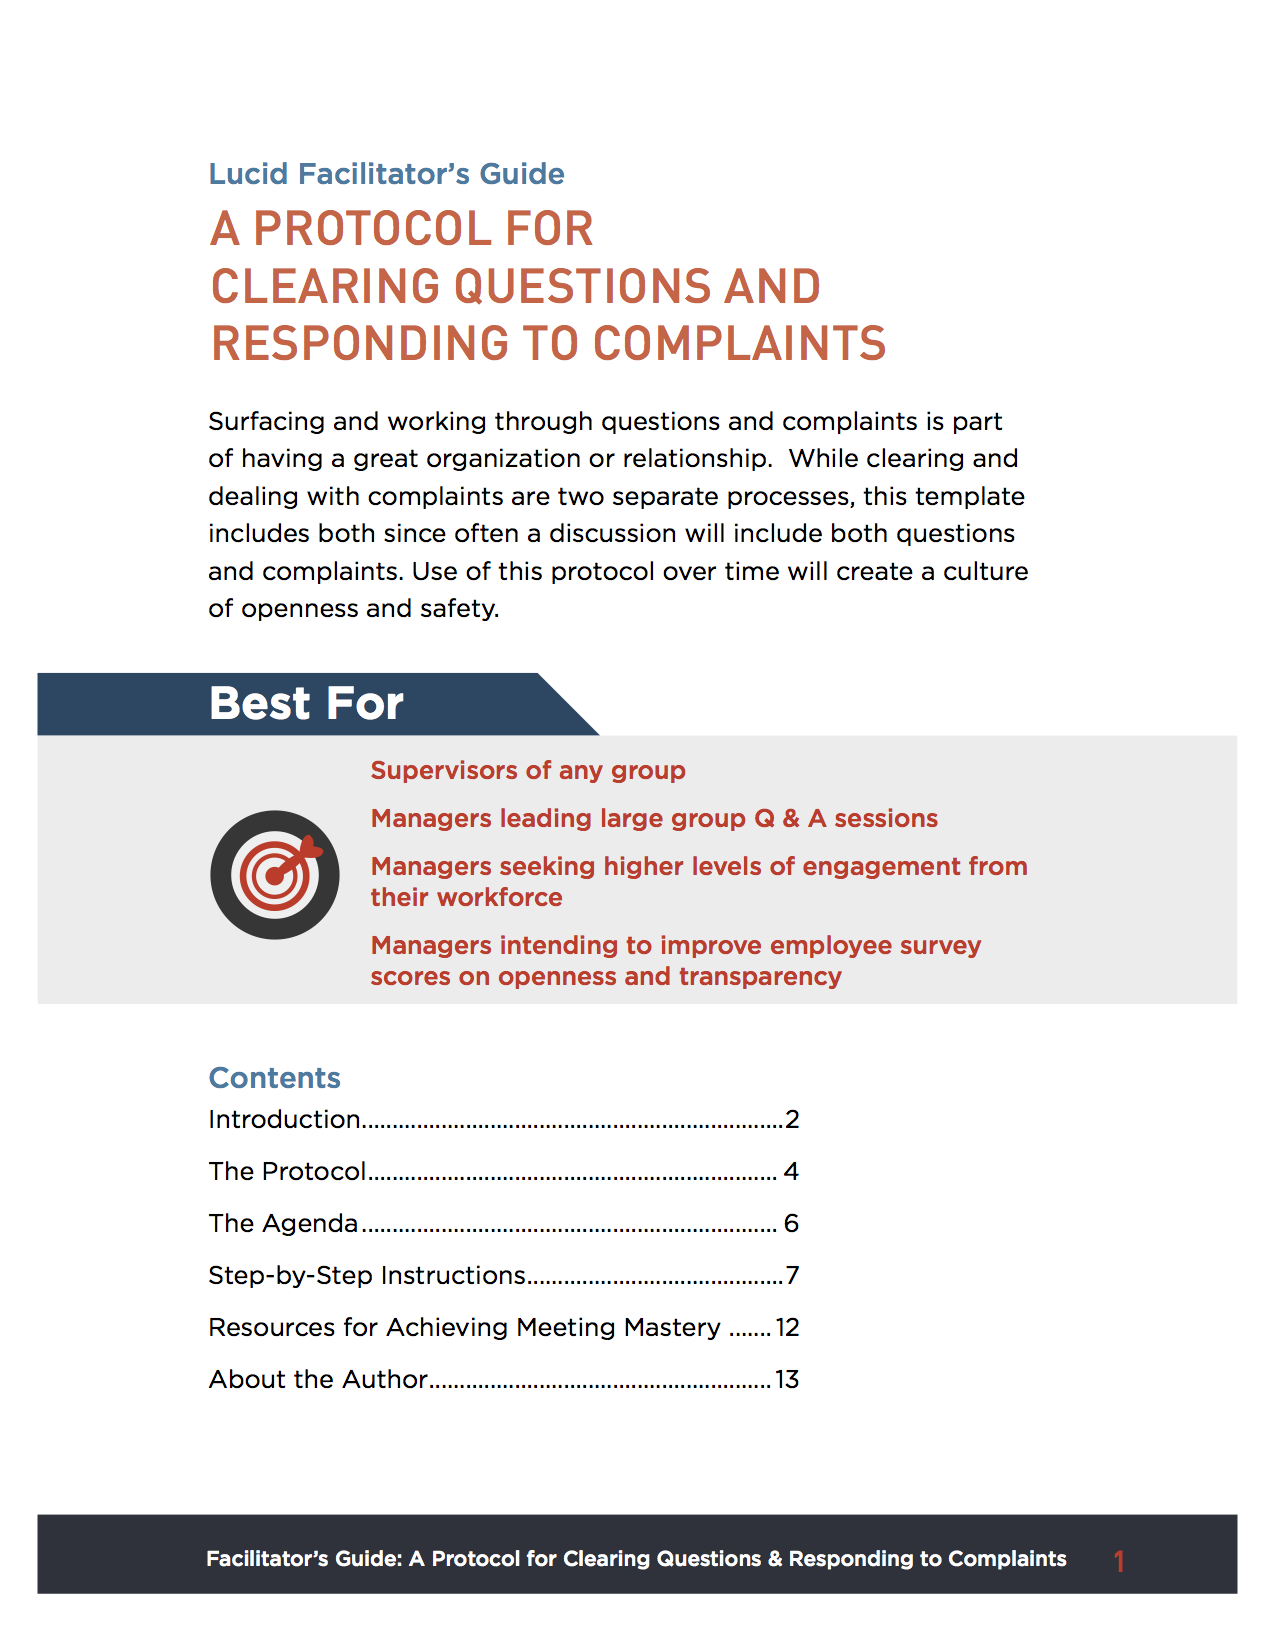 Protocol-for-Questions-Complaints-Facilitators-Guide.png